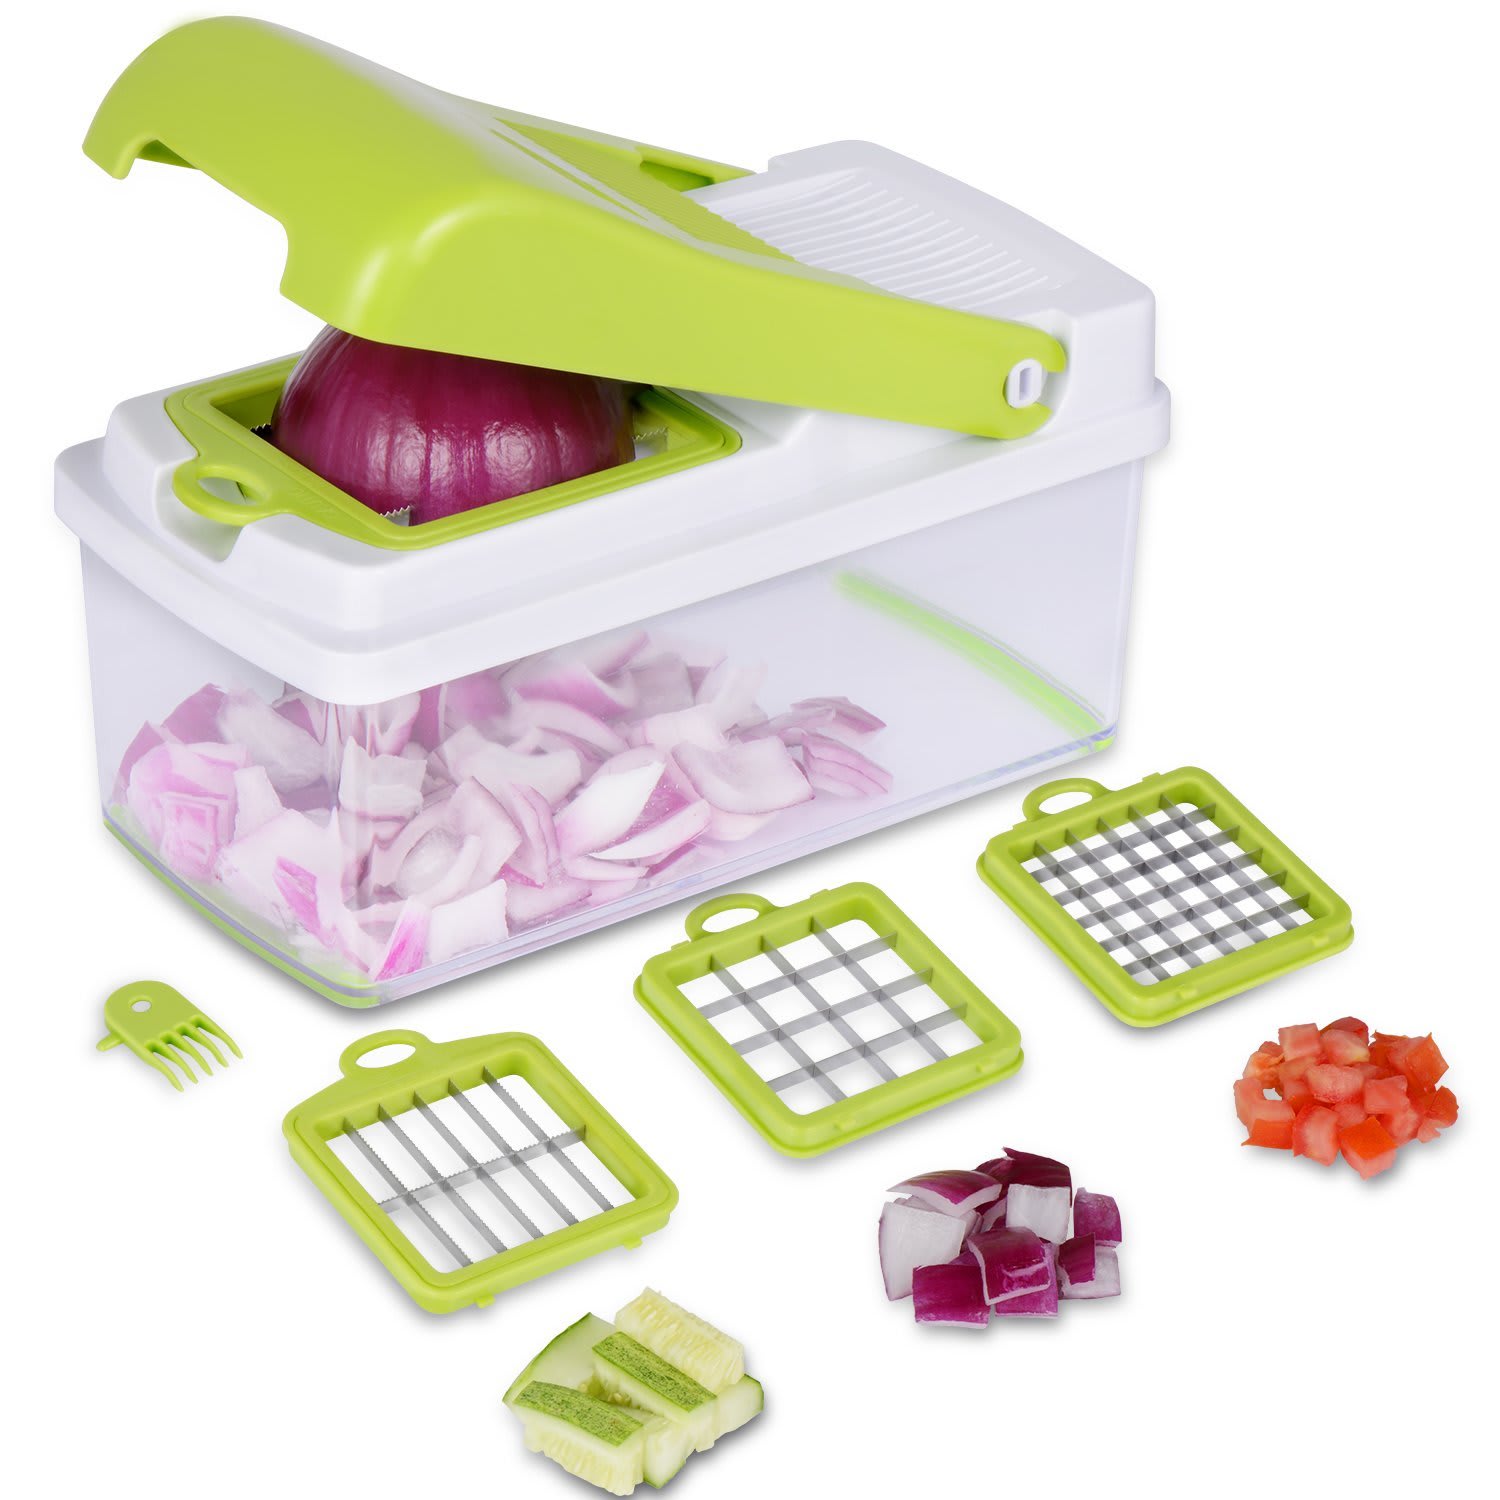 & Vegetables Food Chopper Dishwasher Safe New Chops Vidalia Onions 